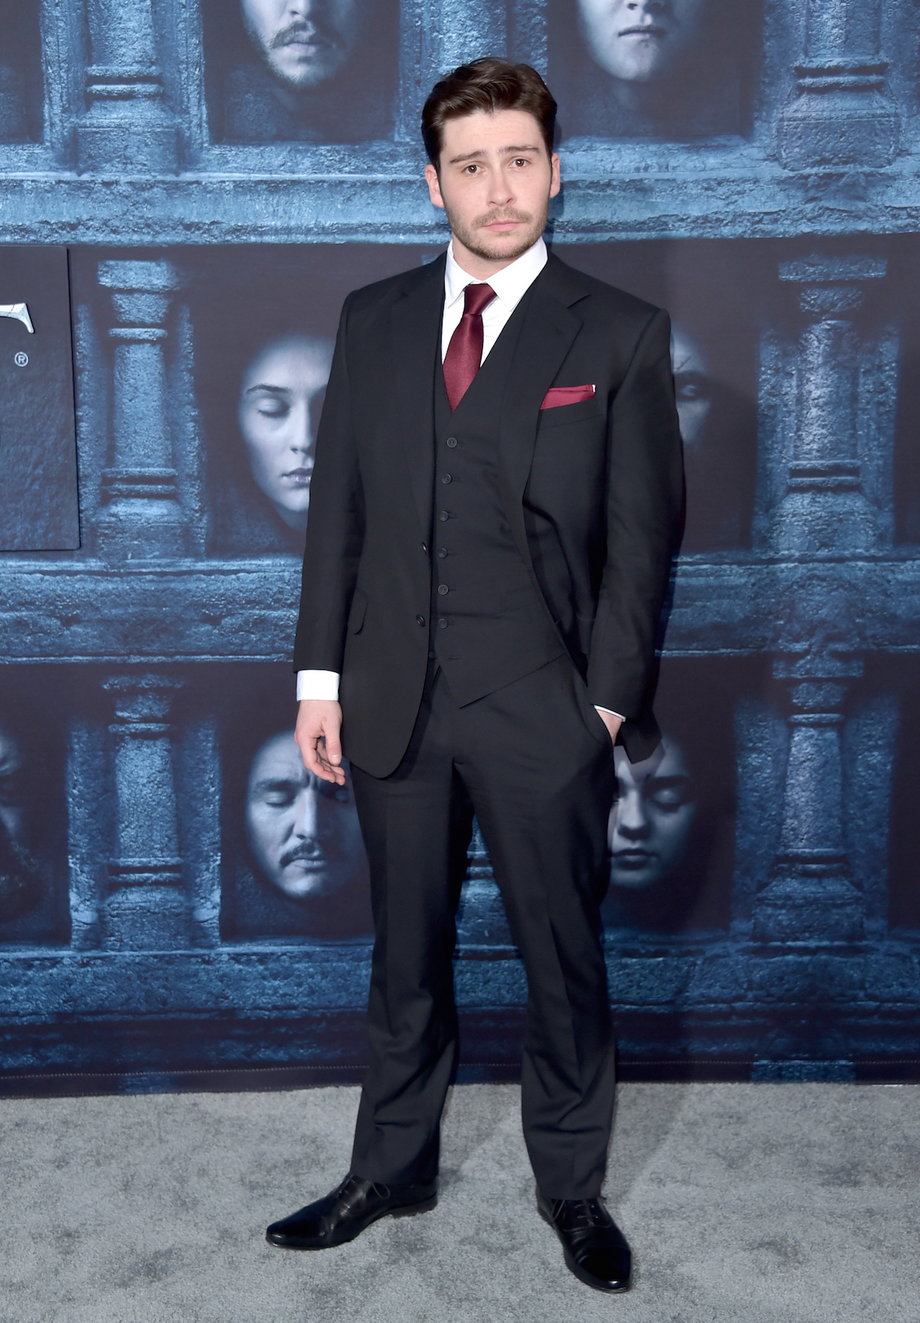 Portman looks sleek in a black suit at the premiere.